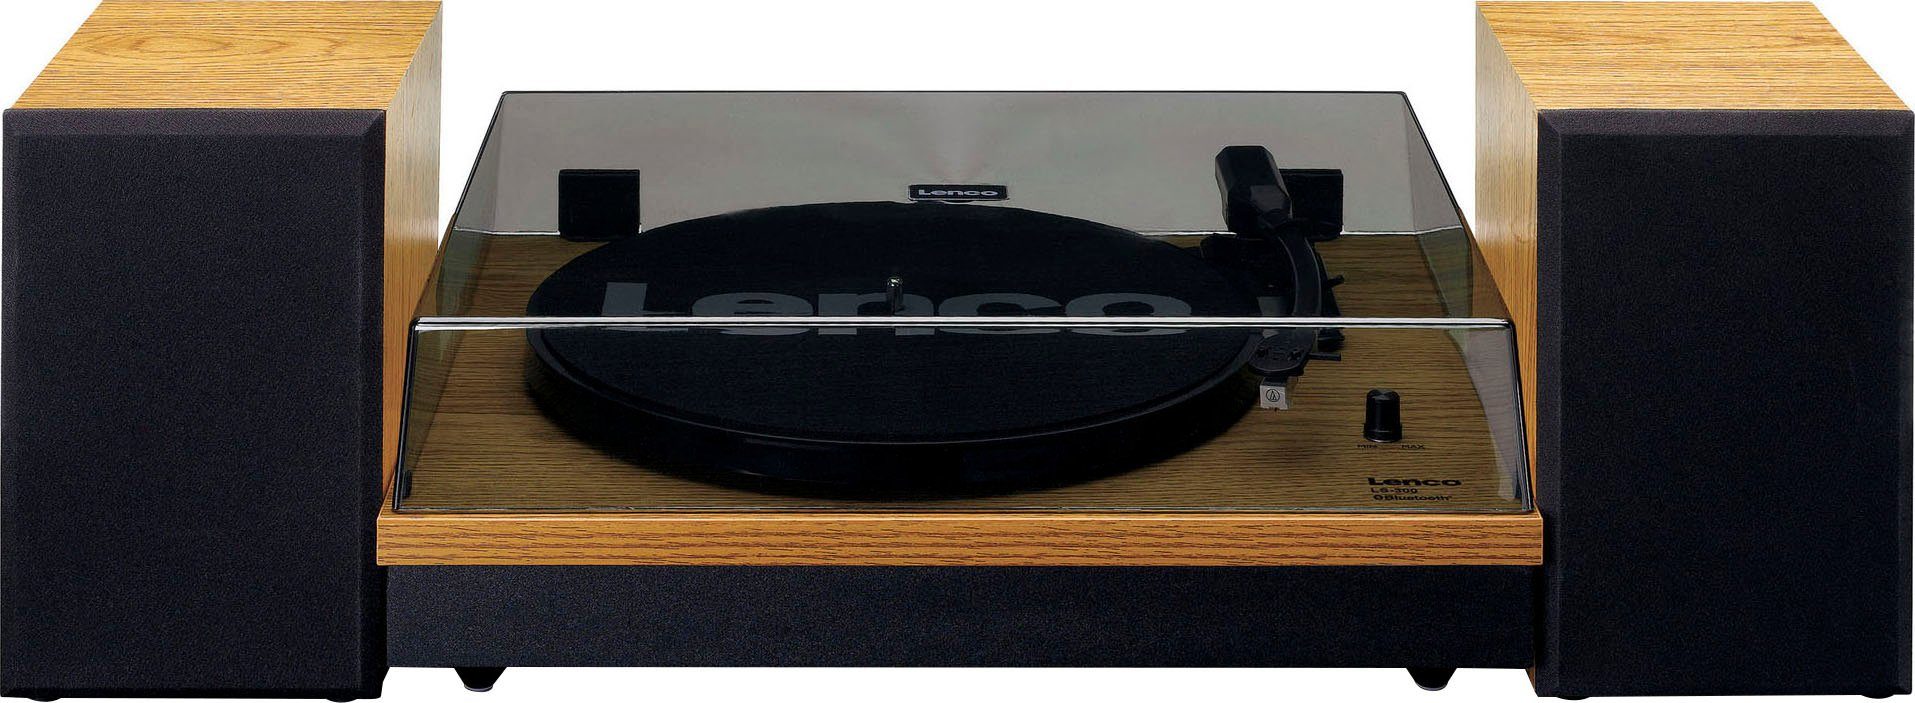 Plattenspieler ext. Holz Lautsprechern LS-300WD (Riemenantrieb) Plattenspieler mit Lenco